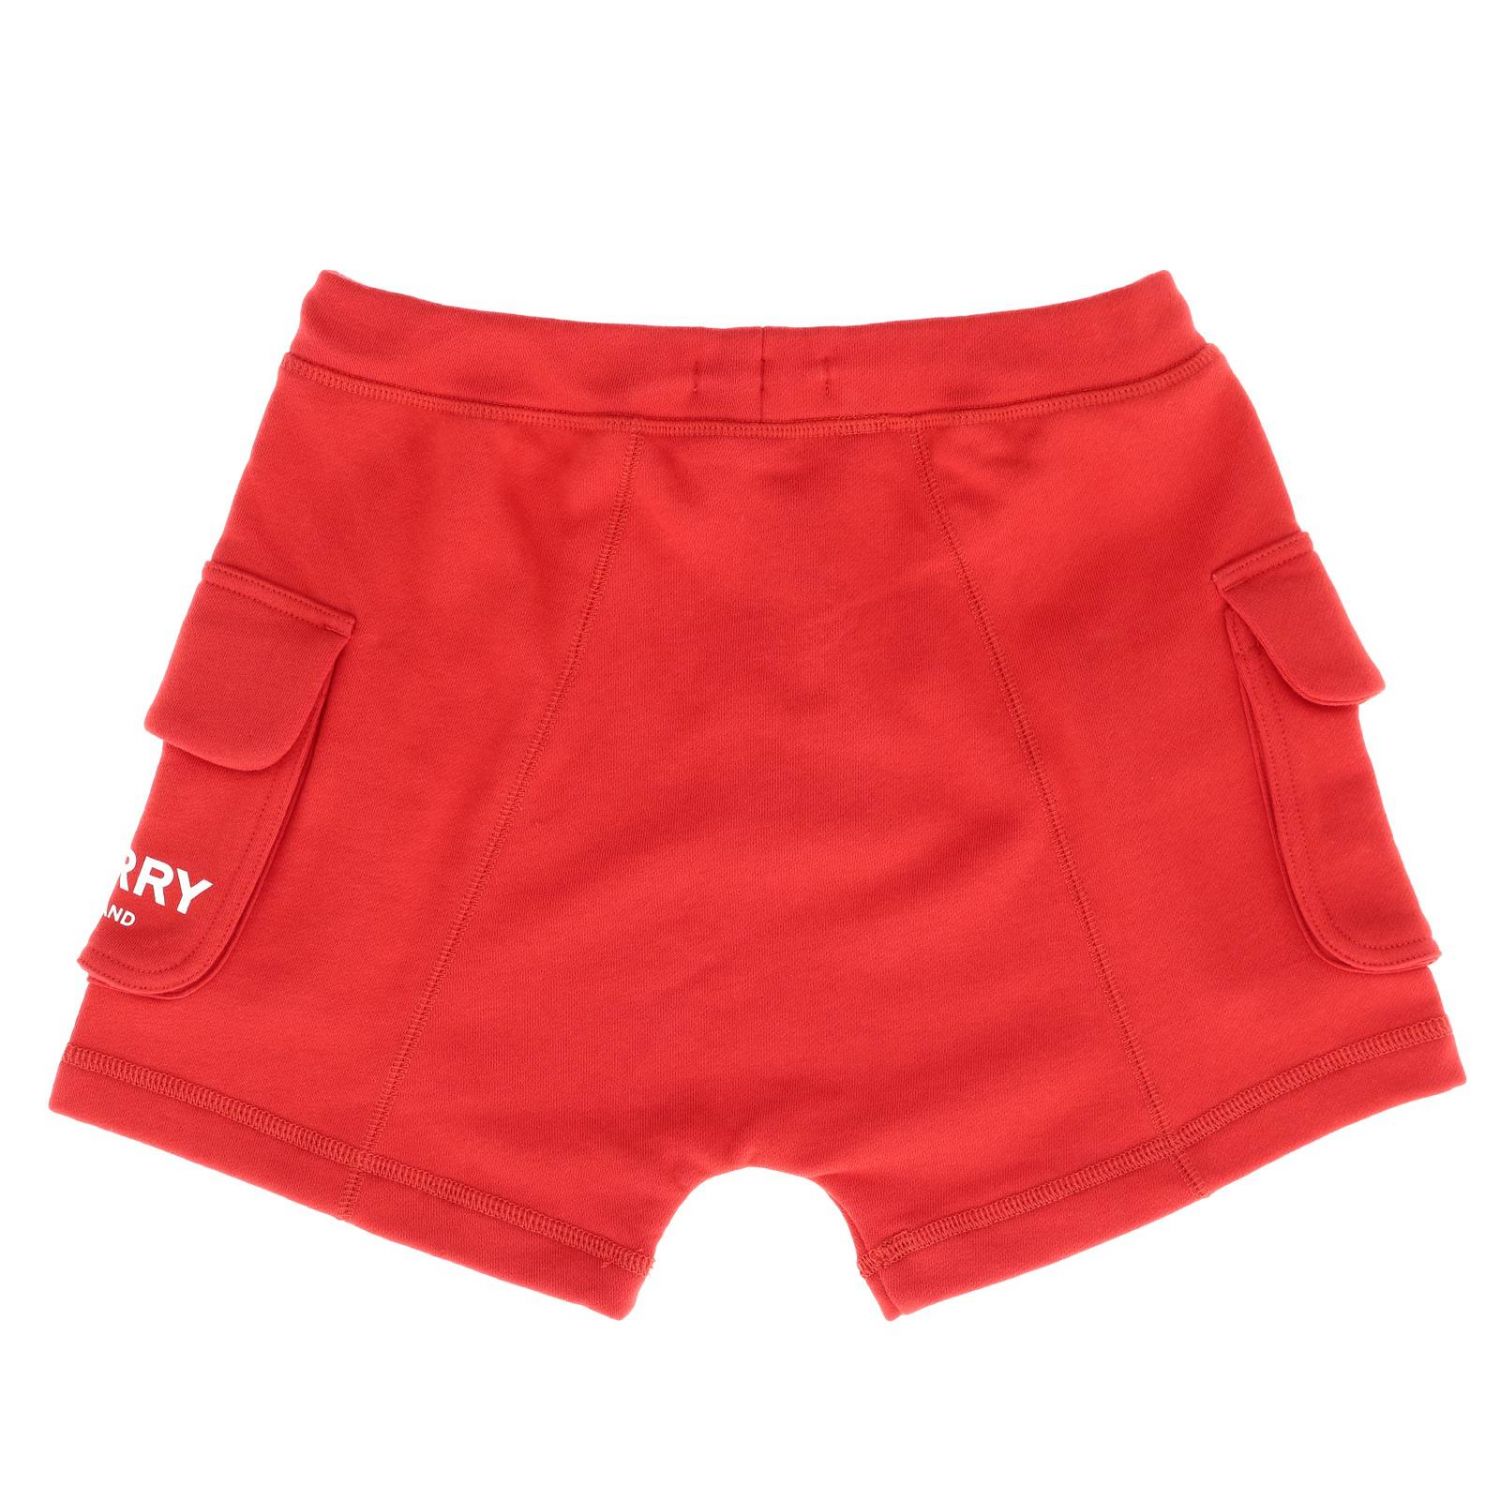 BURBERRY: Pants kids | Pants Burberry Kids Red | Pants Burberry 8010985